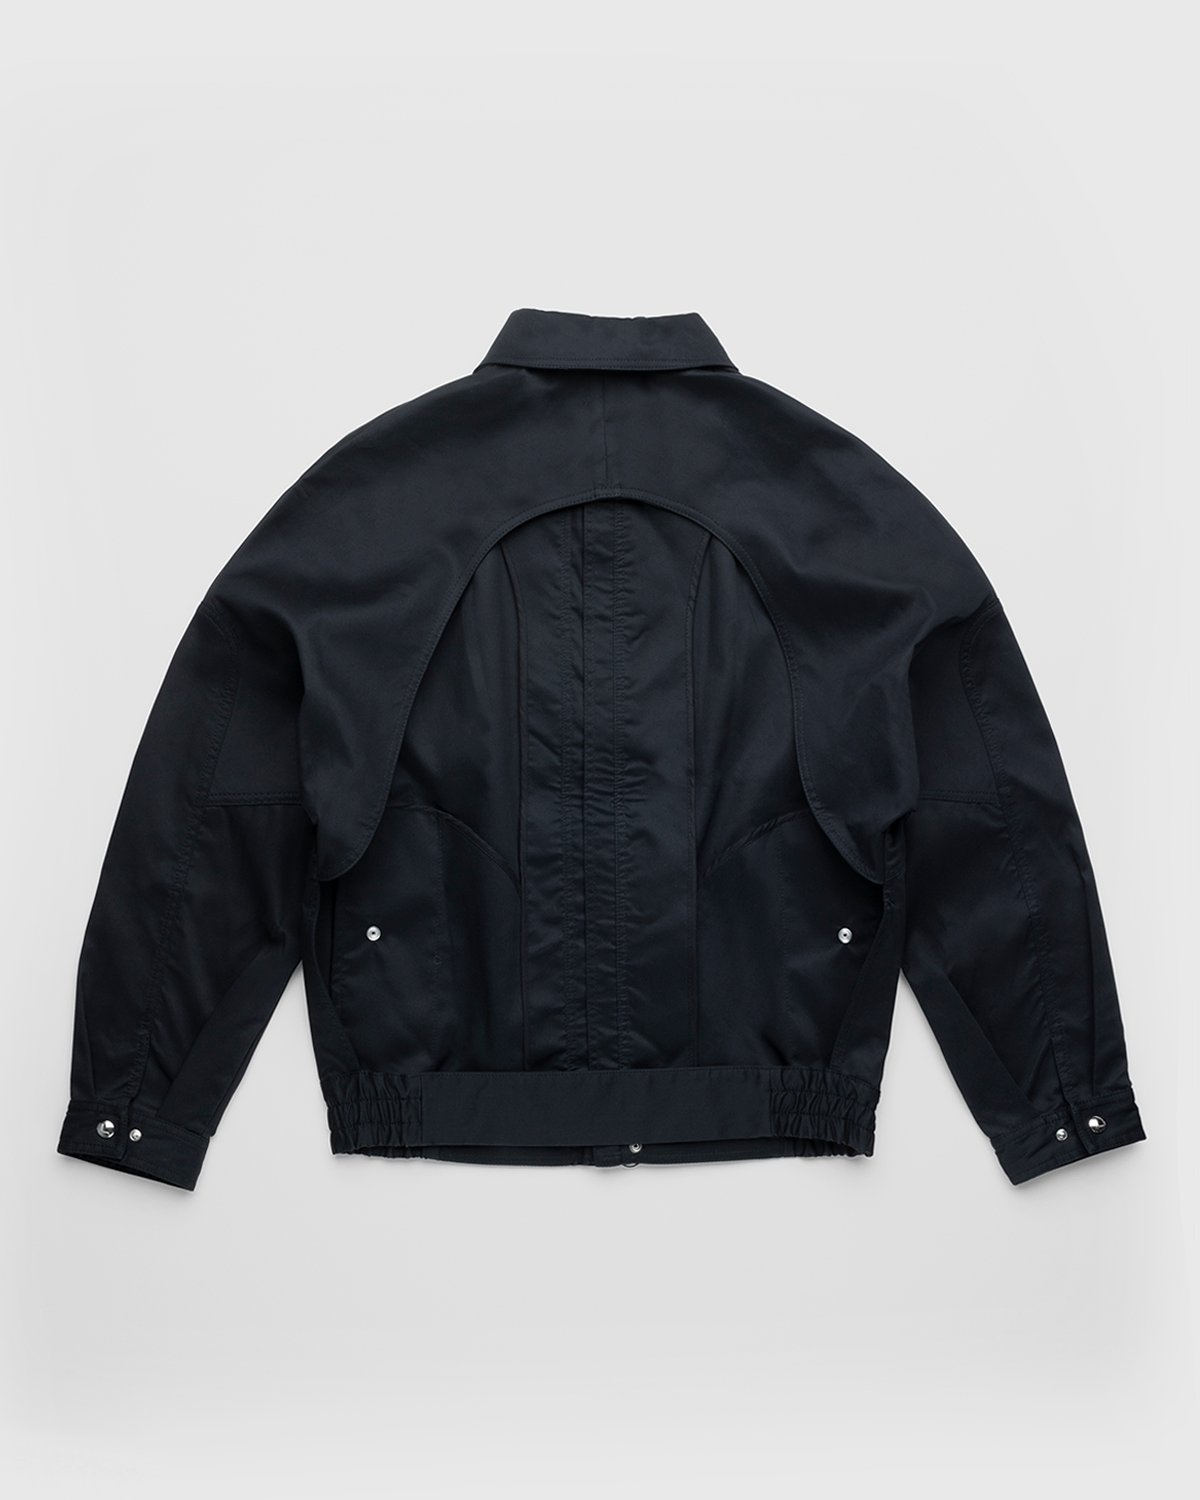 Lourdes New York – Backless Jacket Black - Jackets - Black - Image 2